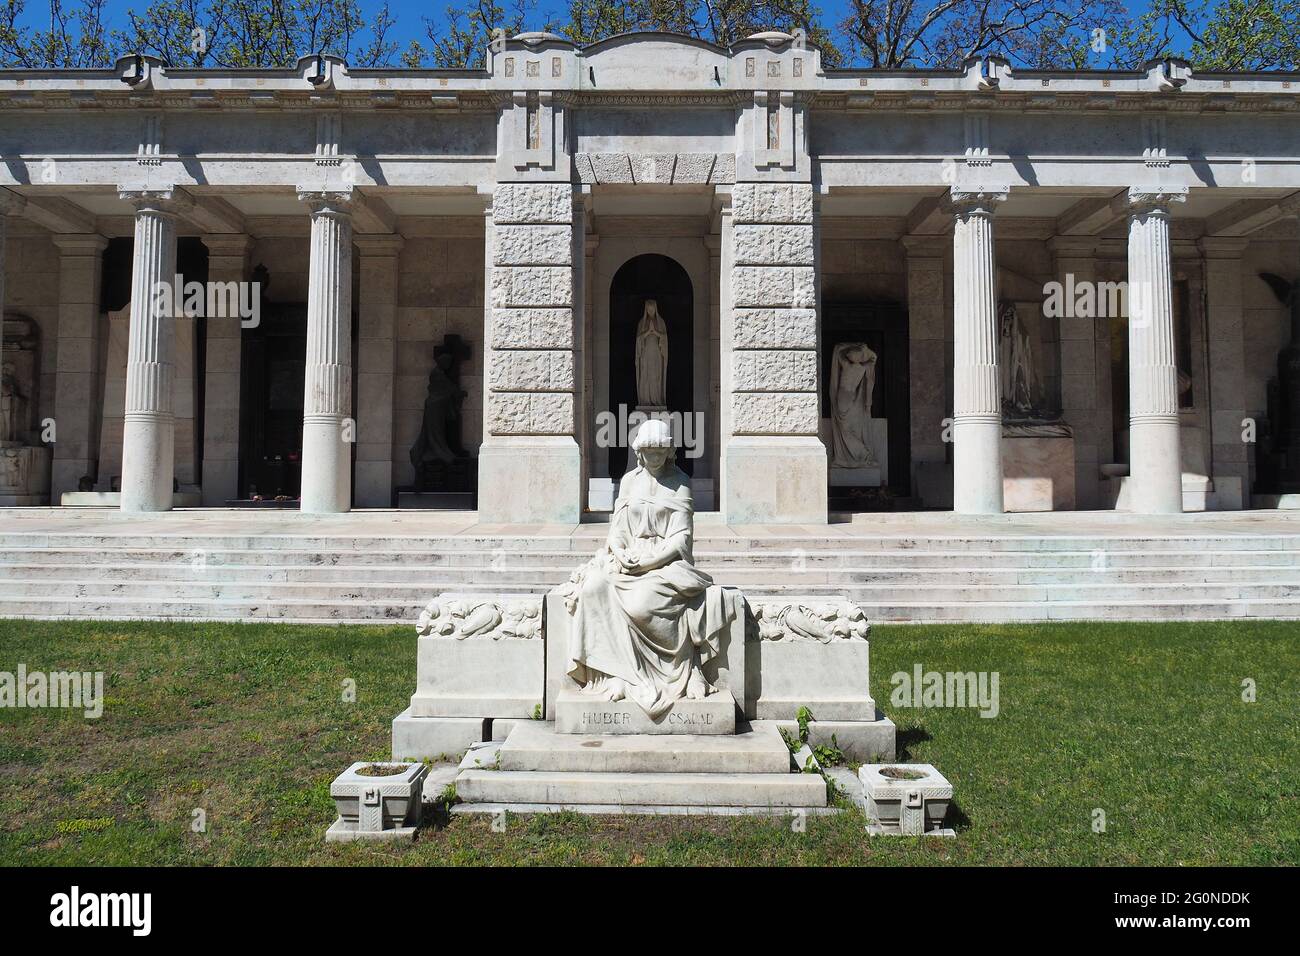 Arcades, Kerepesi Cemetery (Fiume Road National Graveyard), 8th District, Budapest, Hungary, Magyarország, Europe Stock Photo